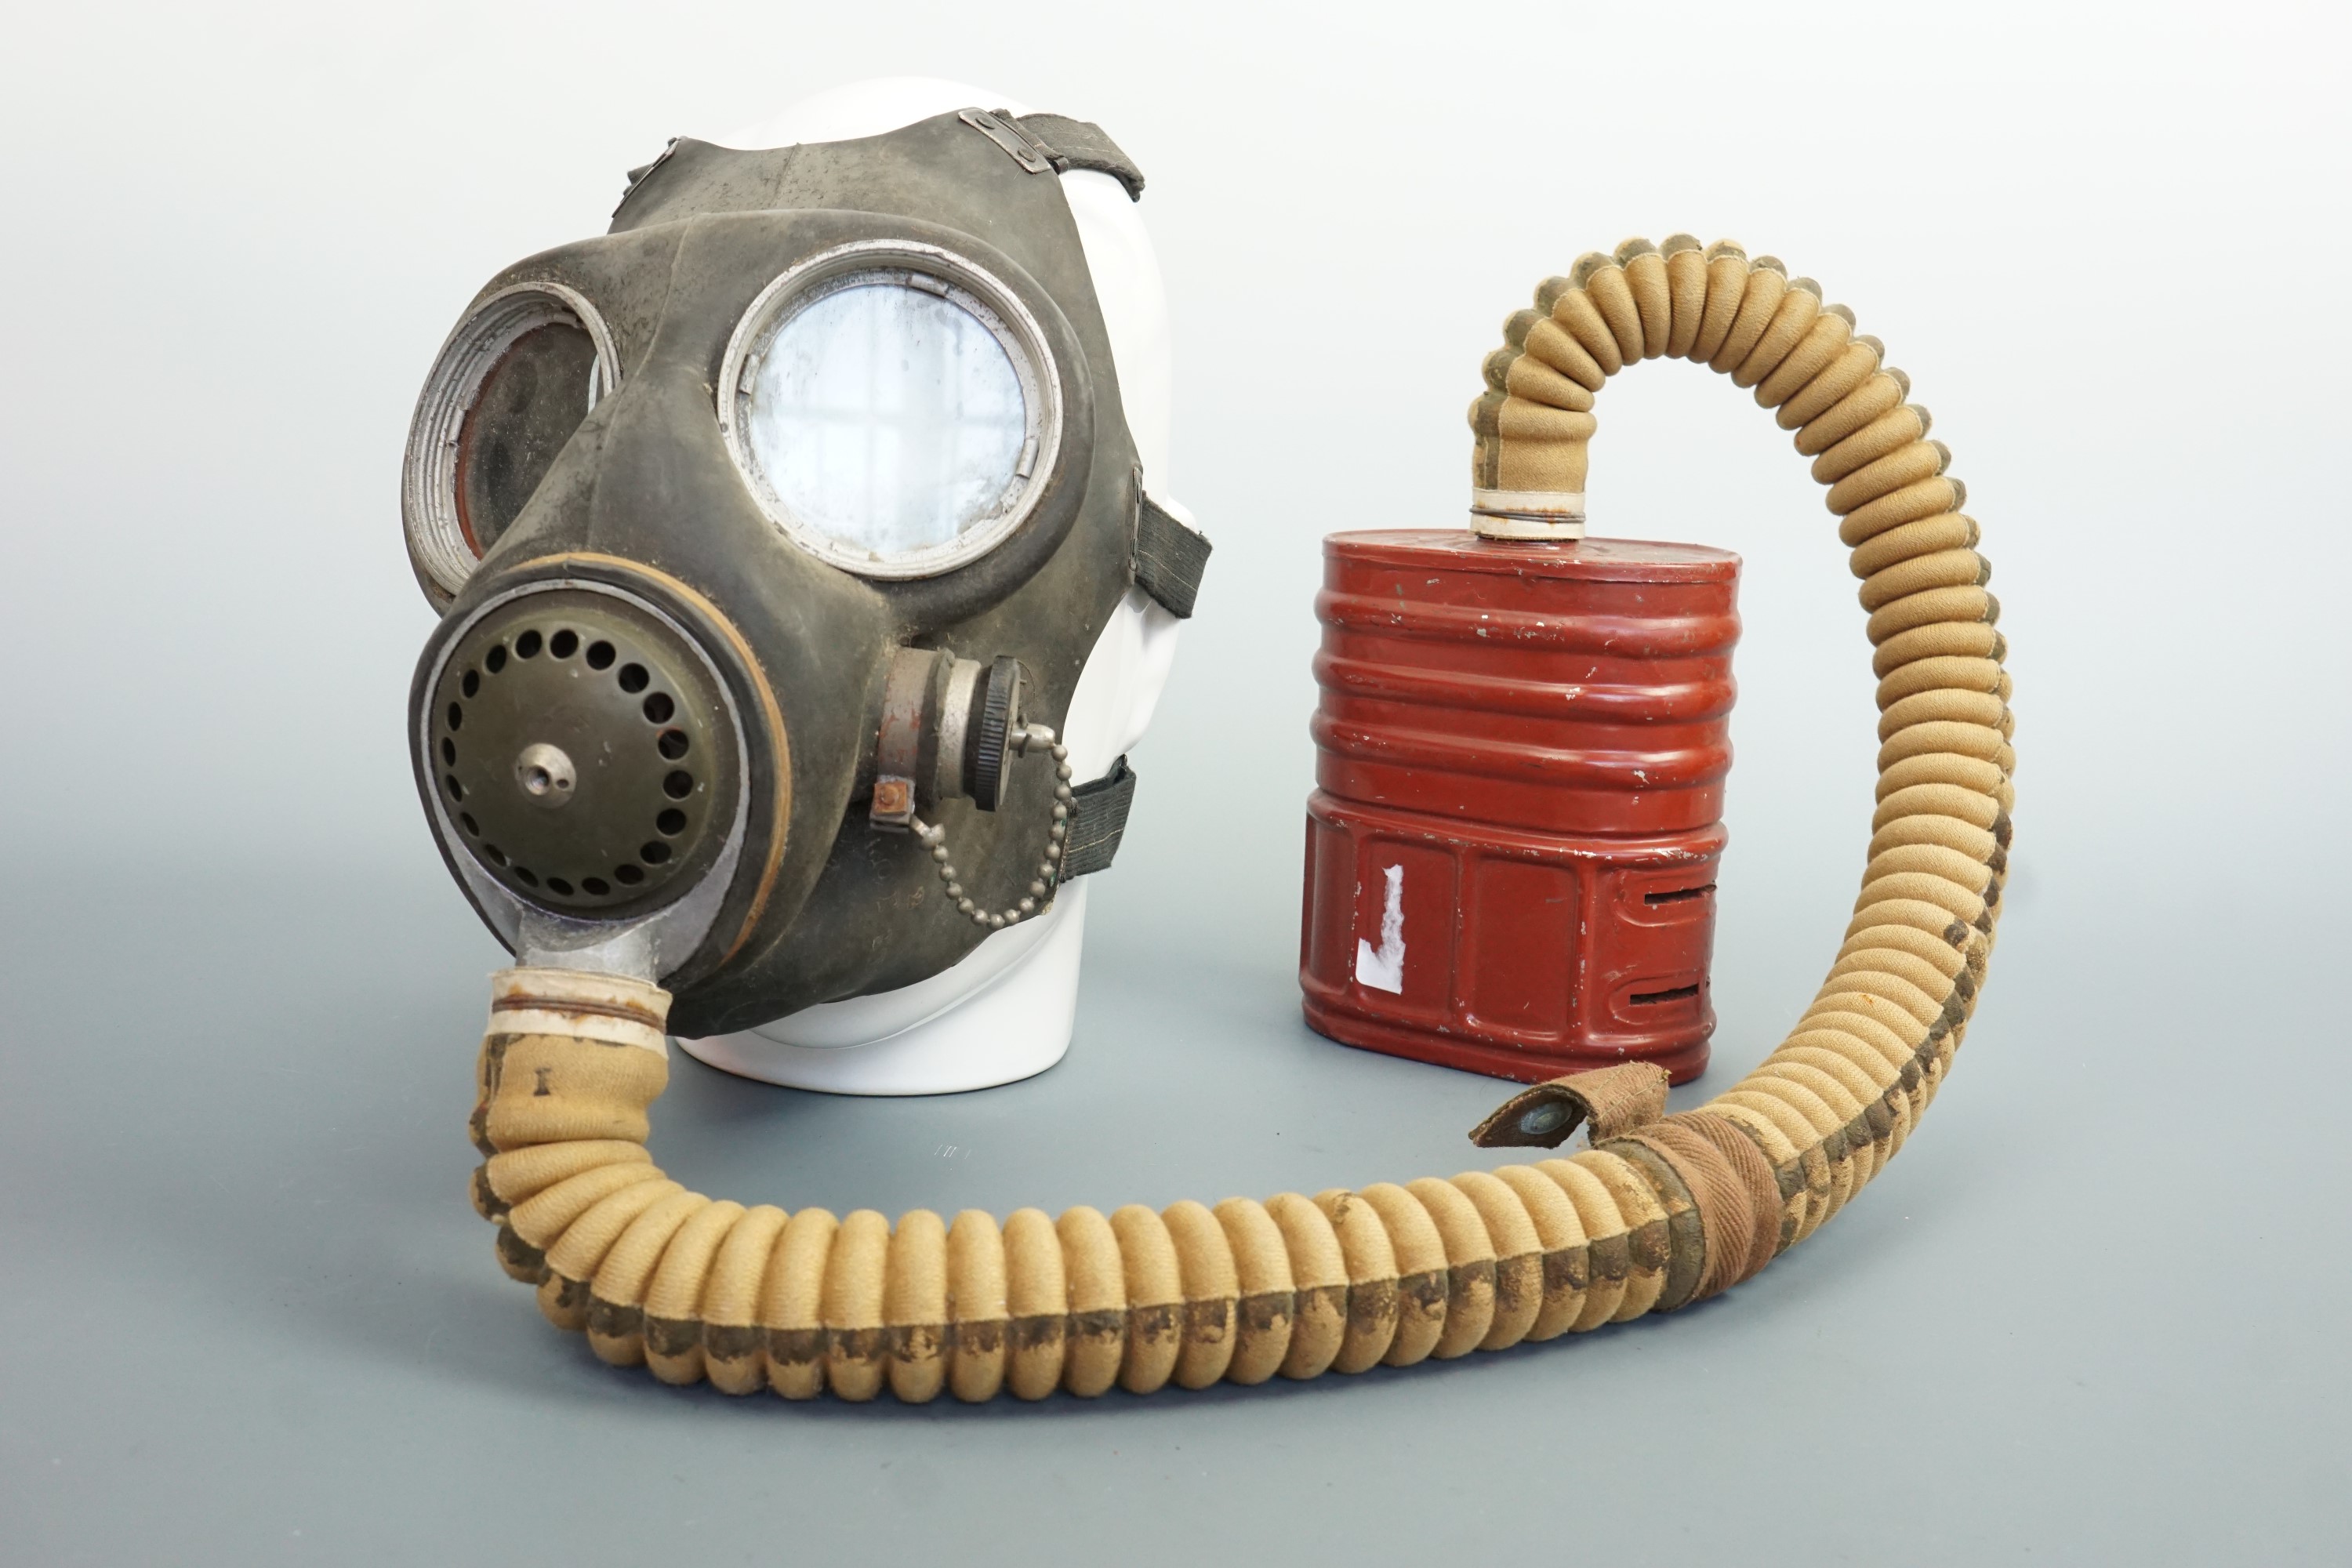 A Second World War British Military long hose respirator